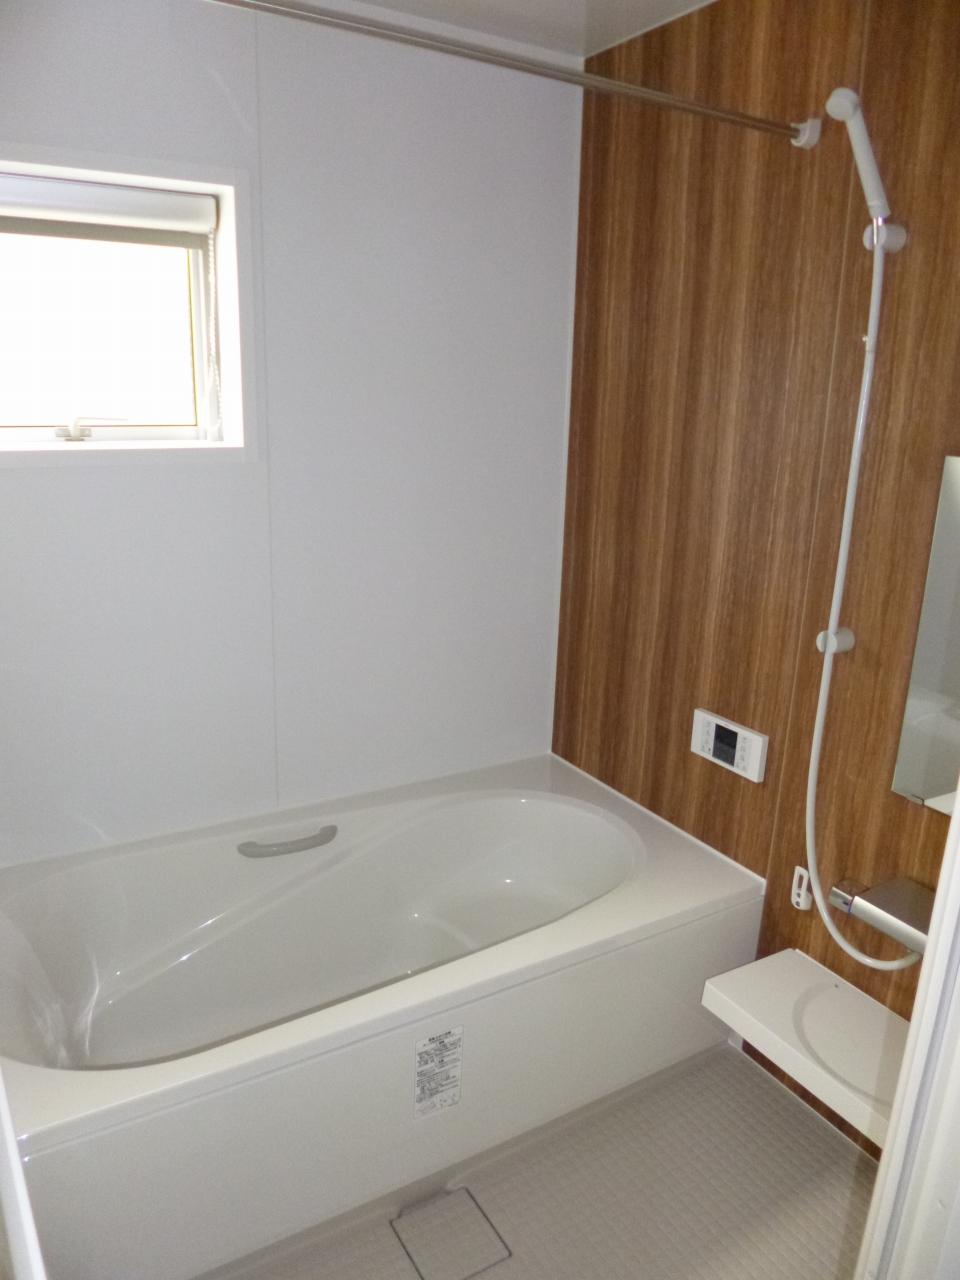 Bathroom. 1 tsubo bus with bathroom ventilation drying function